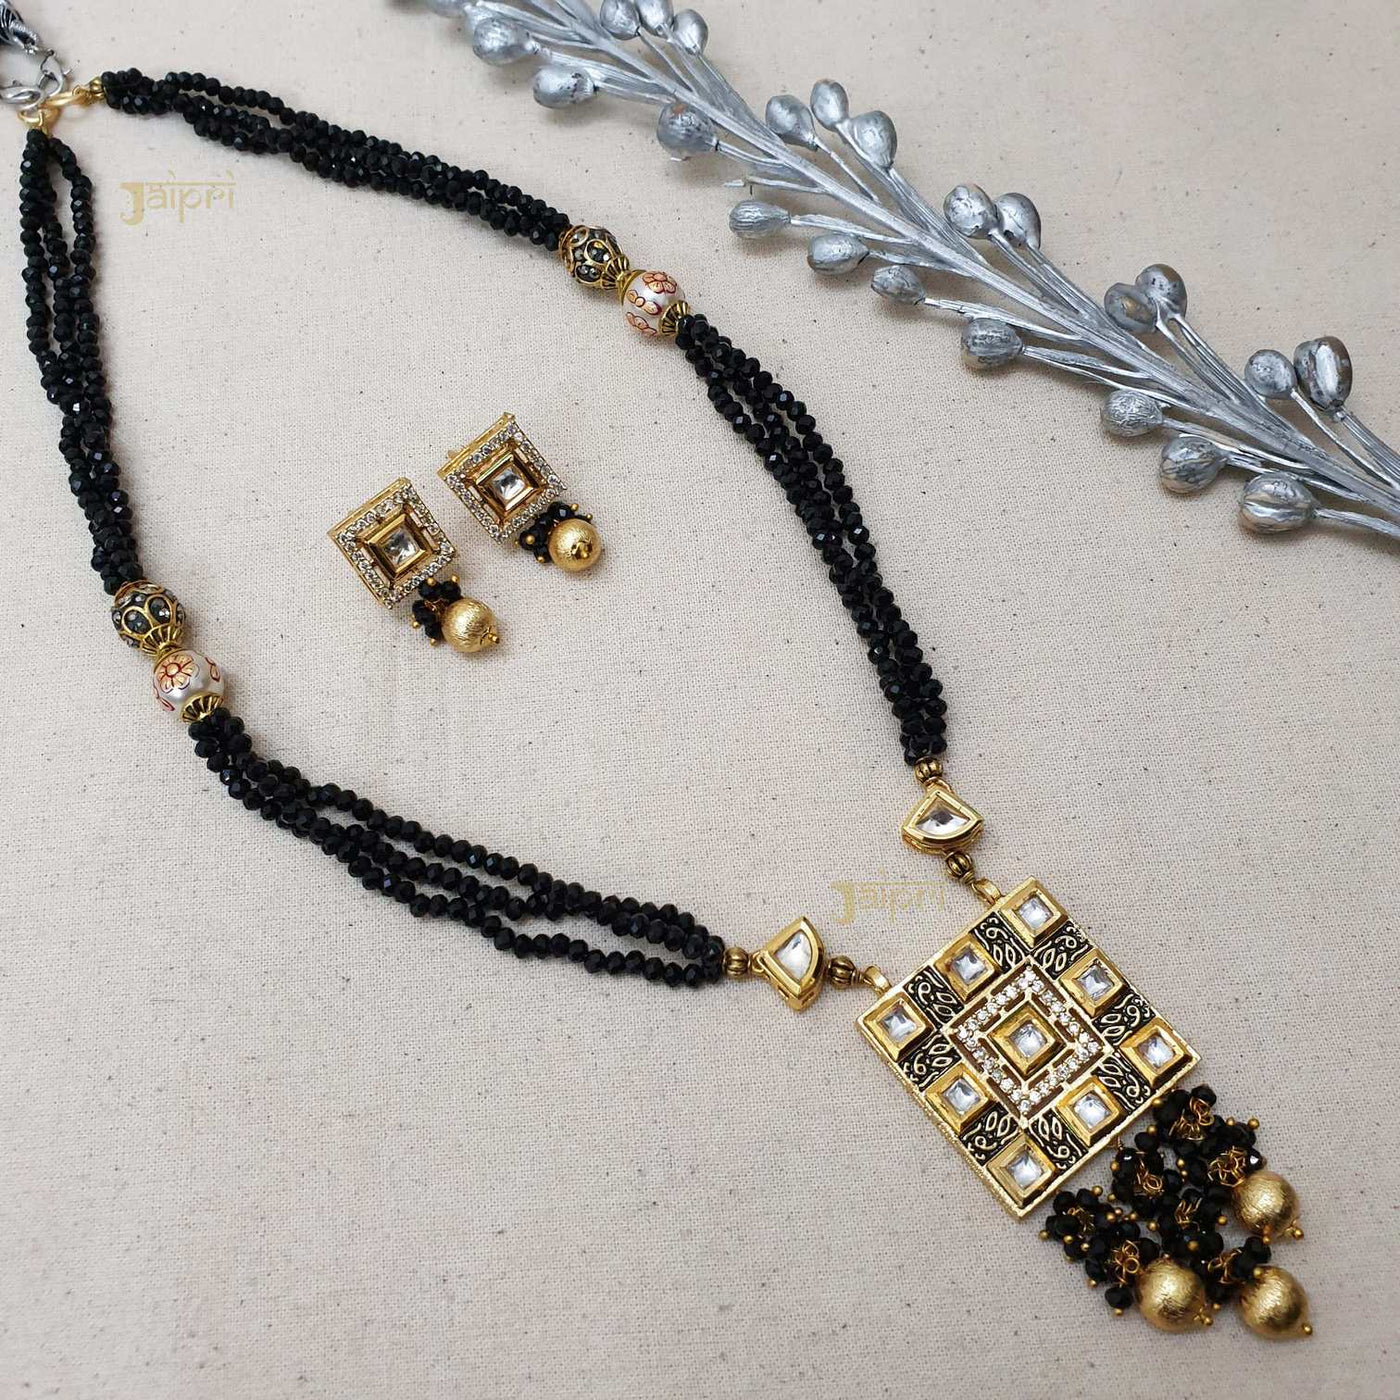 Black Beads Stone Kundan Pendant With Earrings